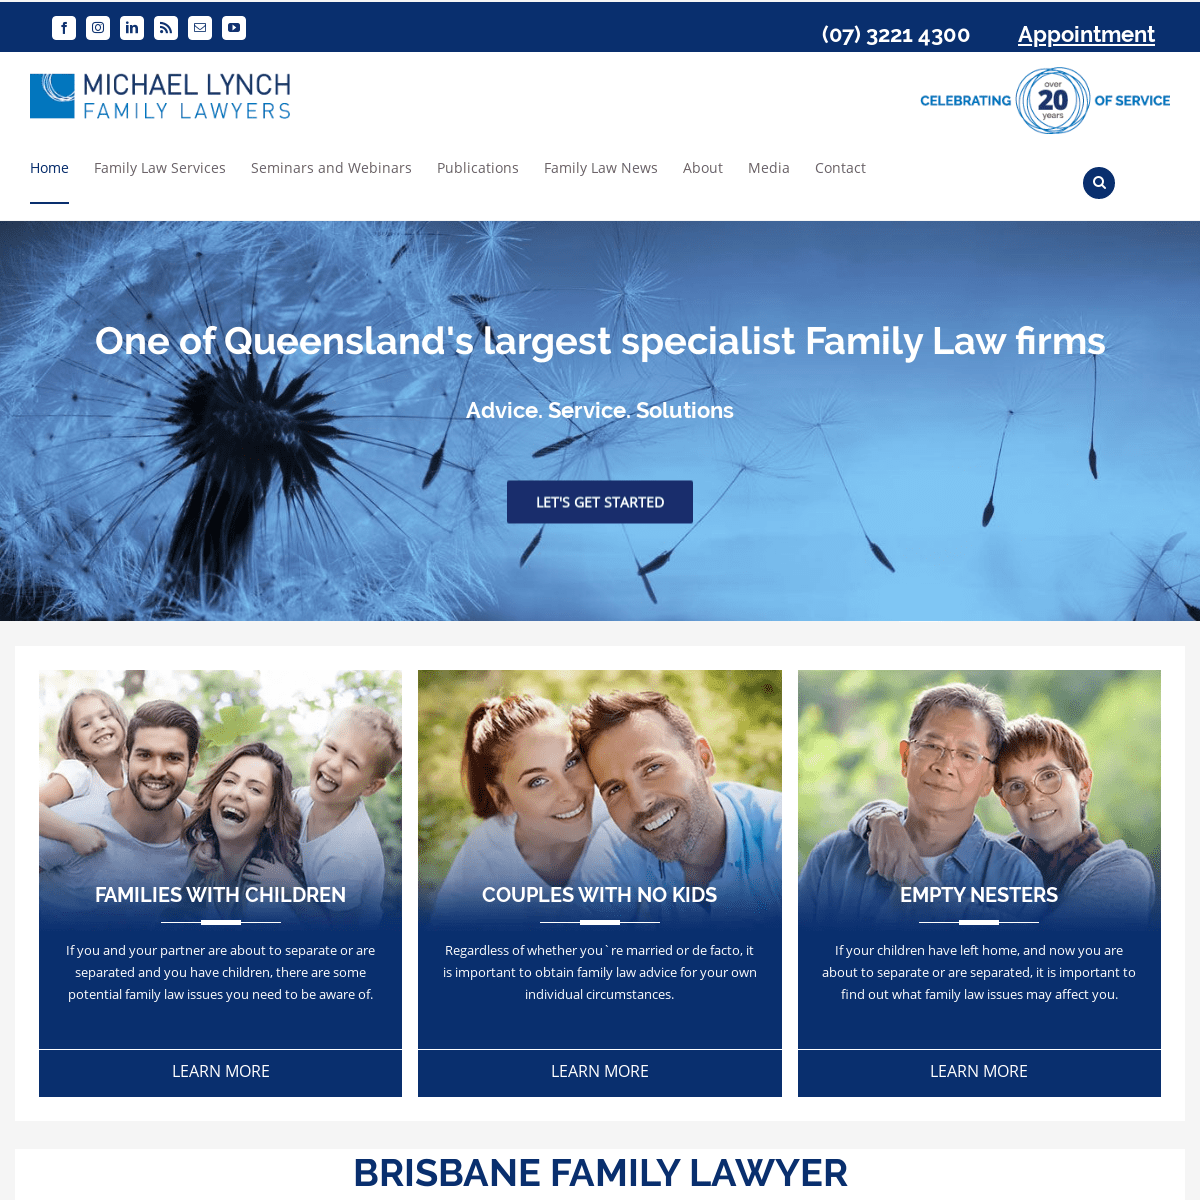 A complete backup of michaellynchfamilylawyers.com.au